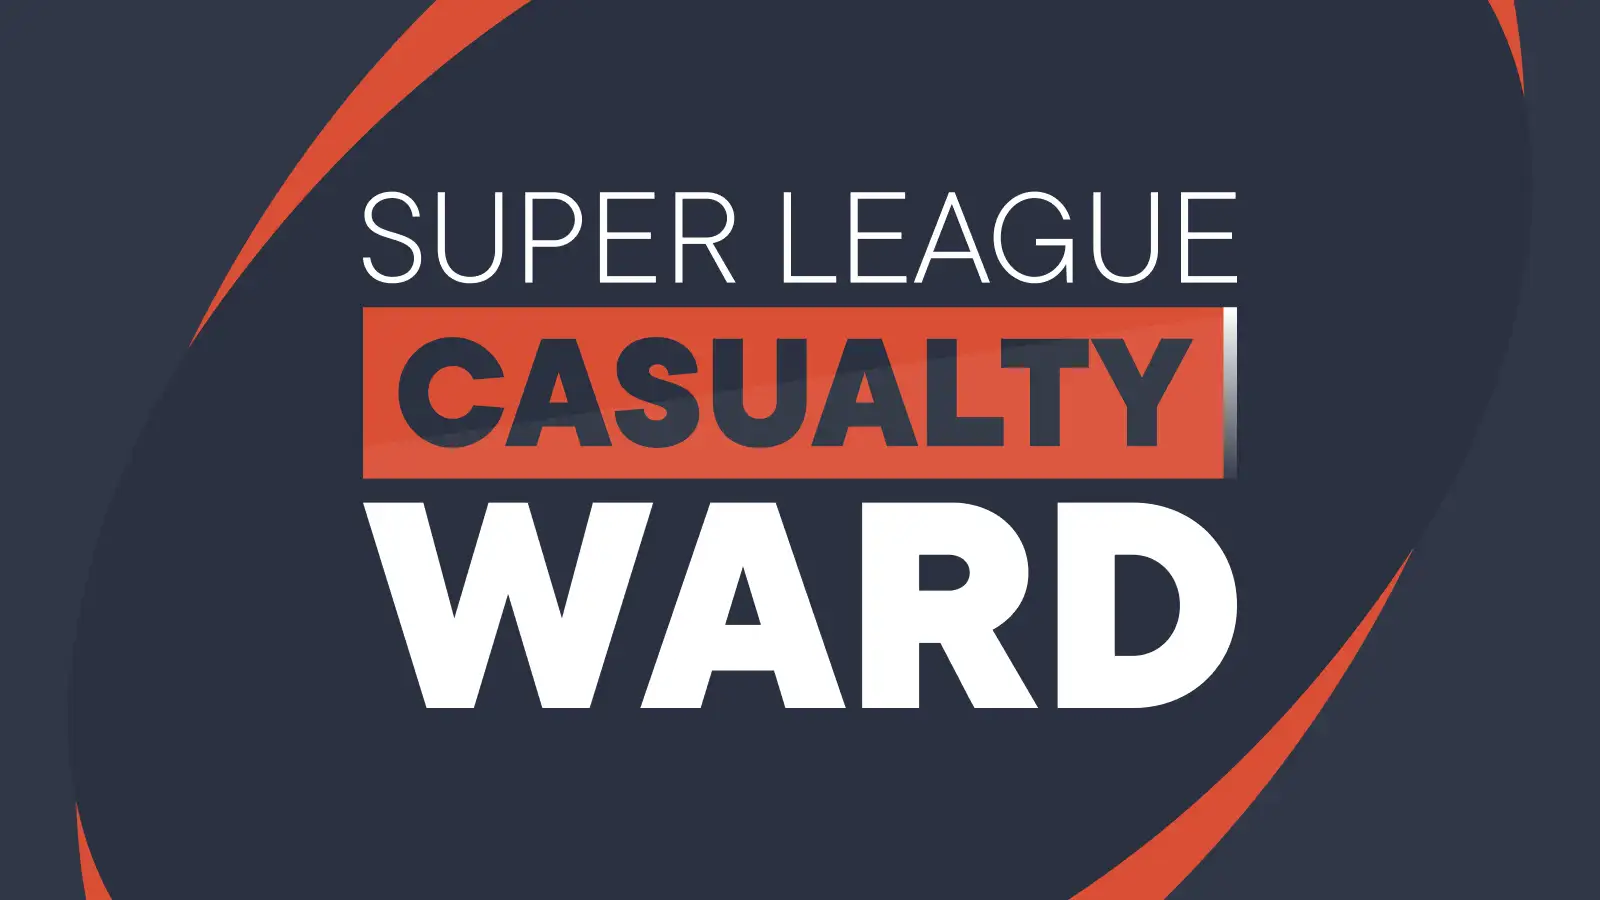 Super League Casualty Ward